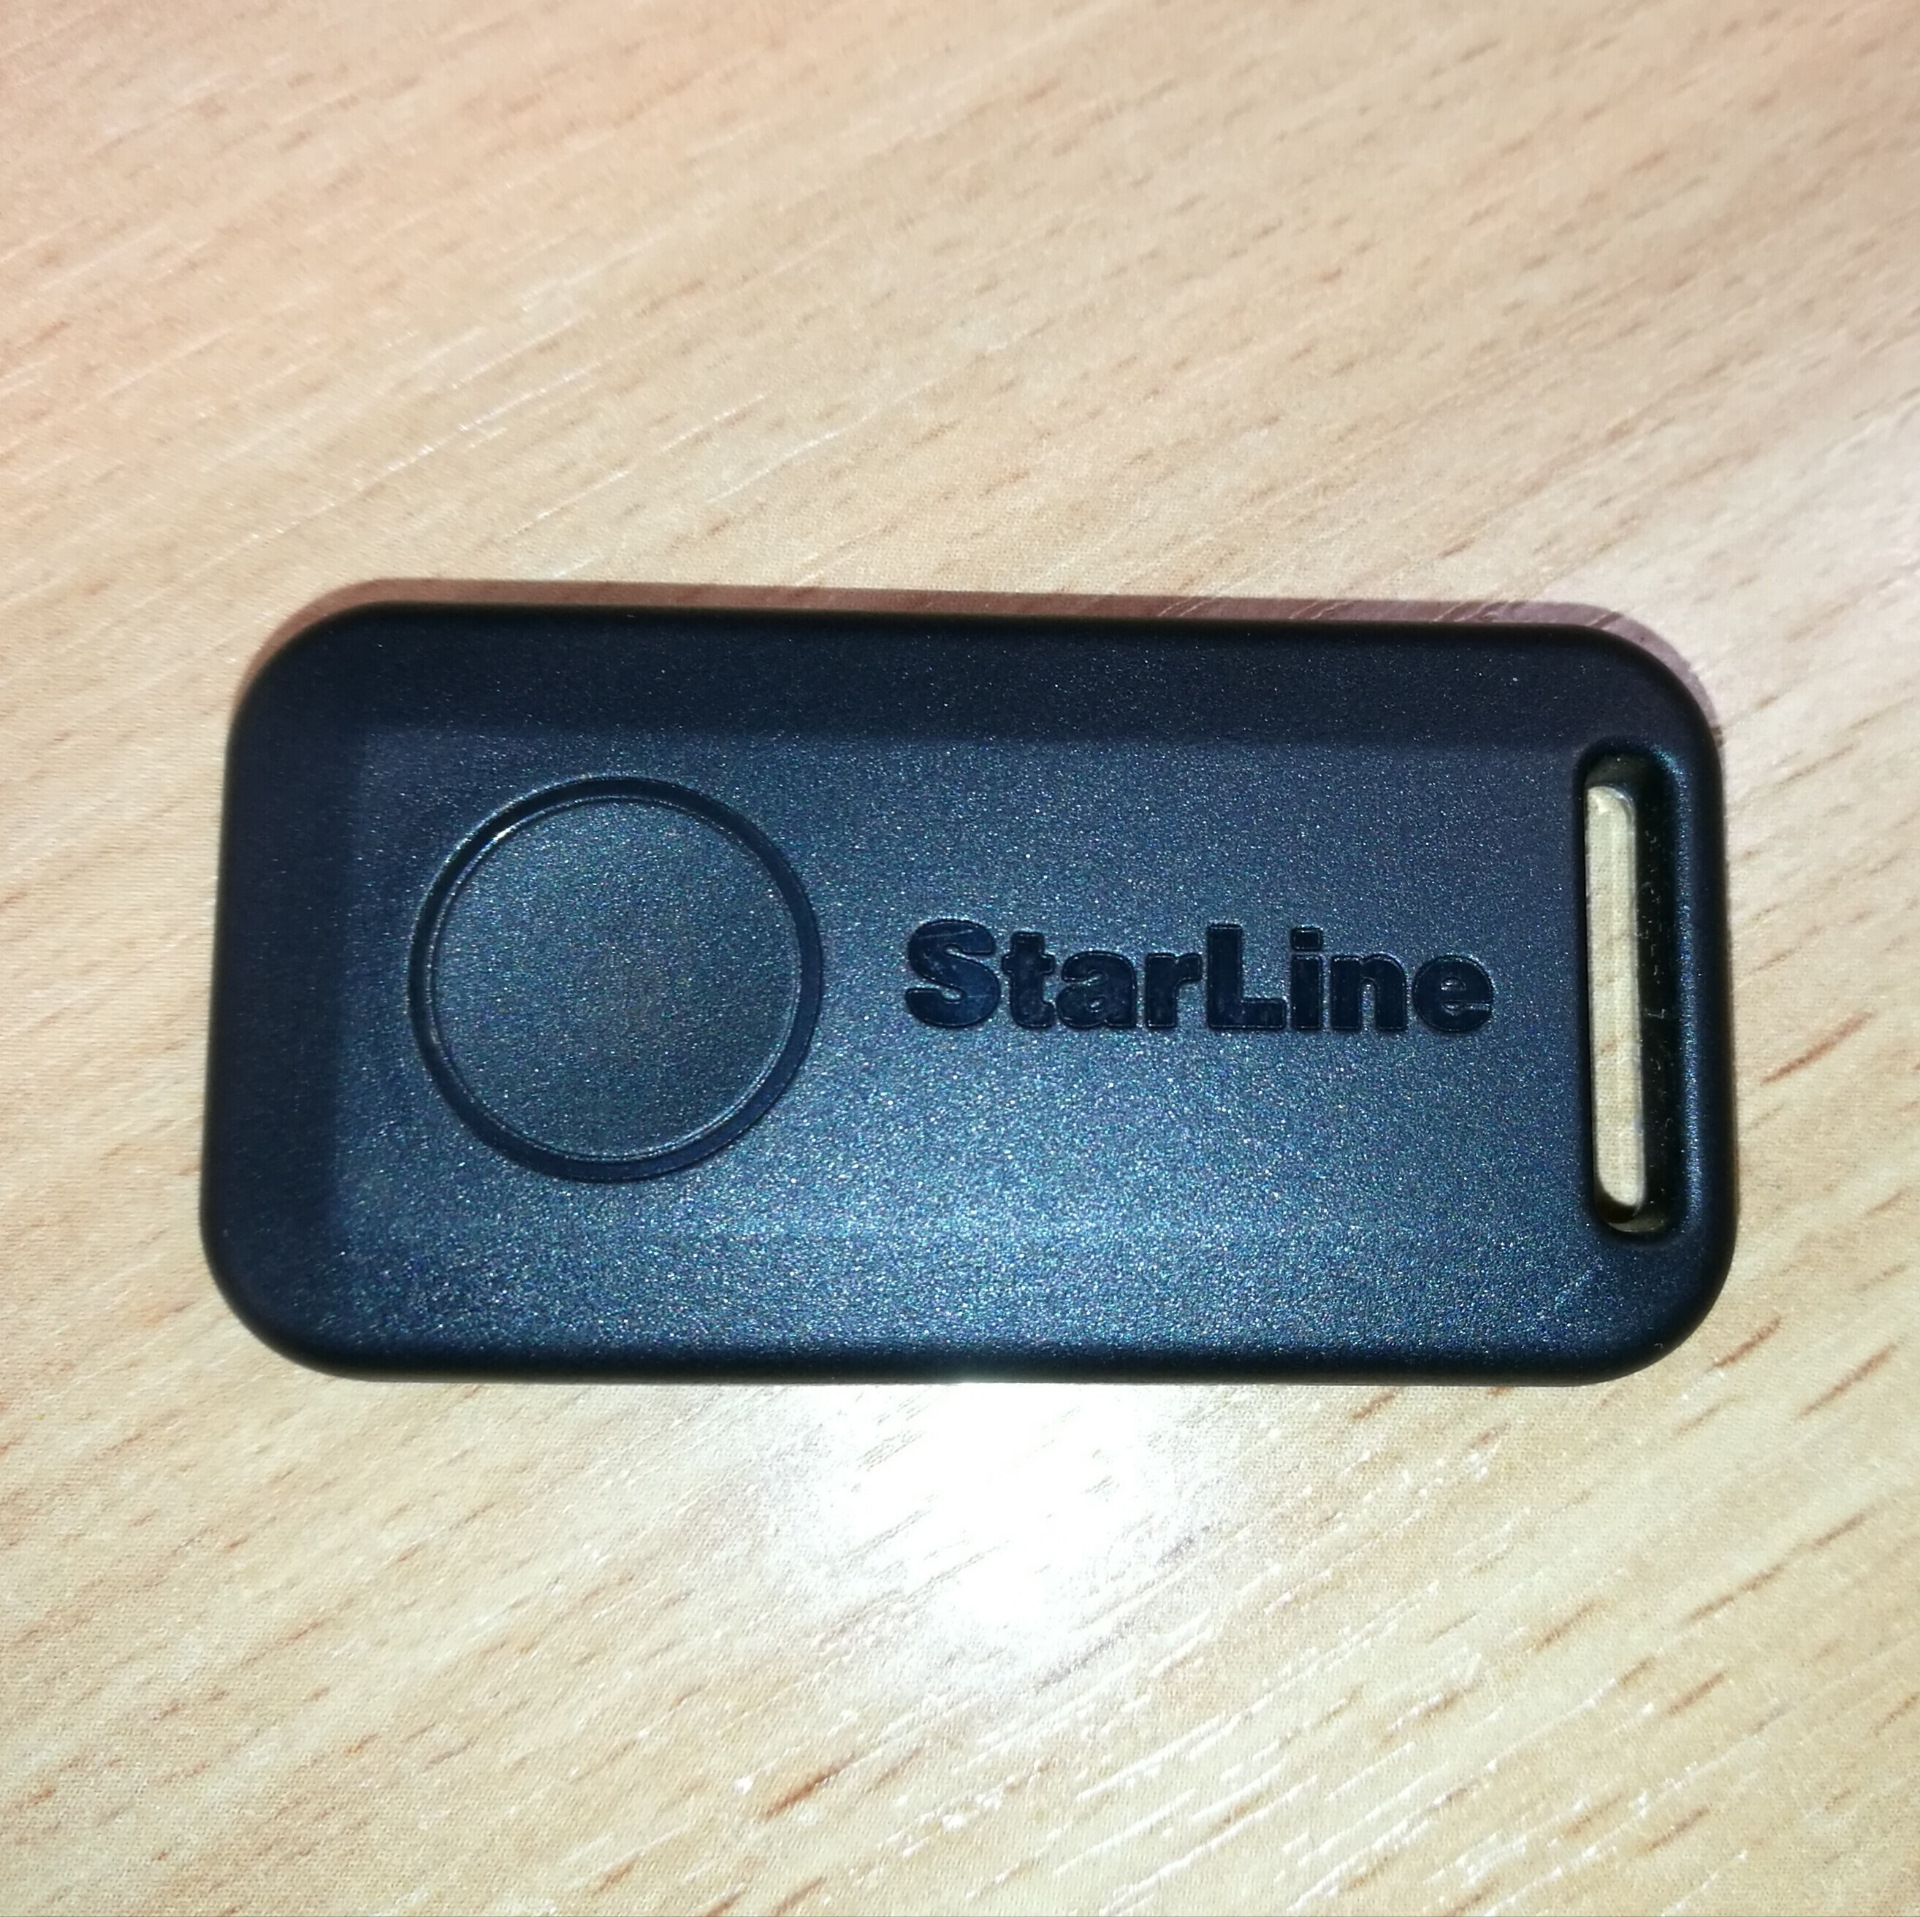 Метки старлайн е96. Метка STARLINE s96. Старлайн s96. Сигнализация STARLINE s96 v2. STARLINE a96 v2 брелок.